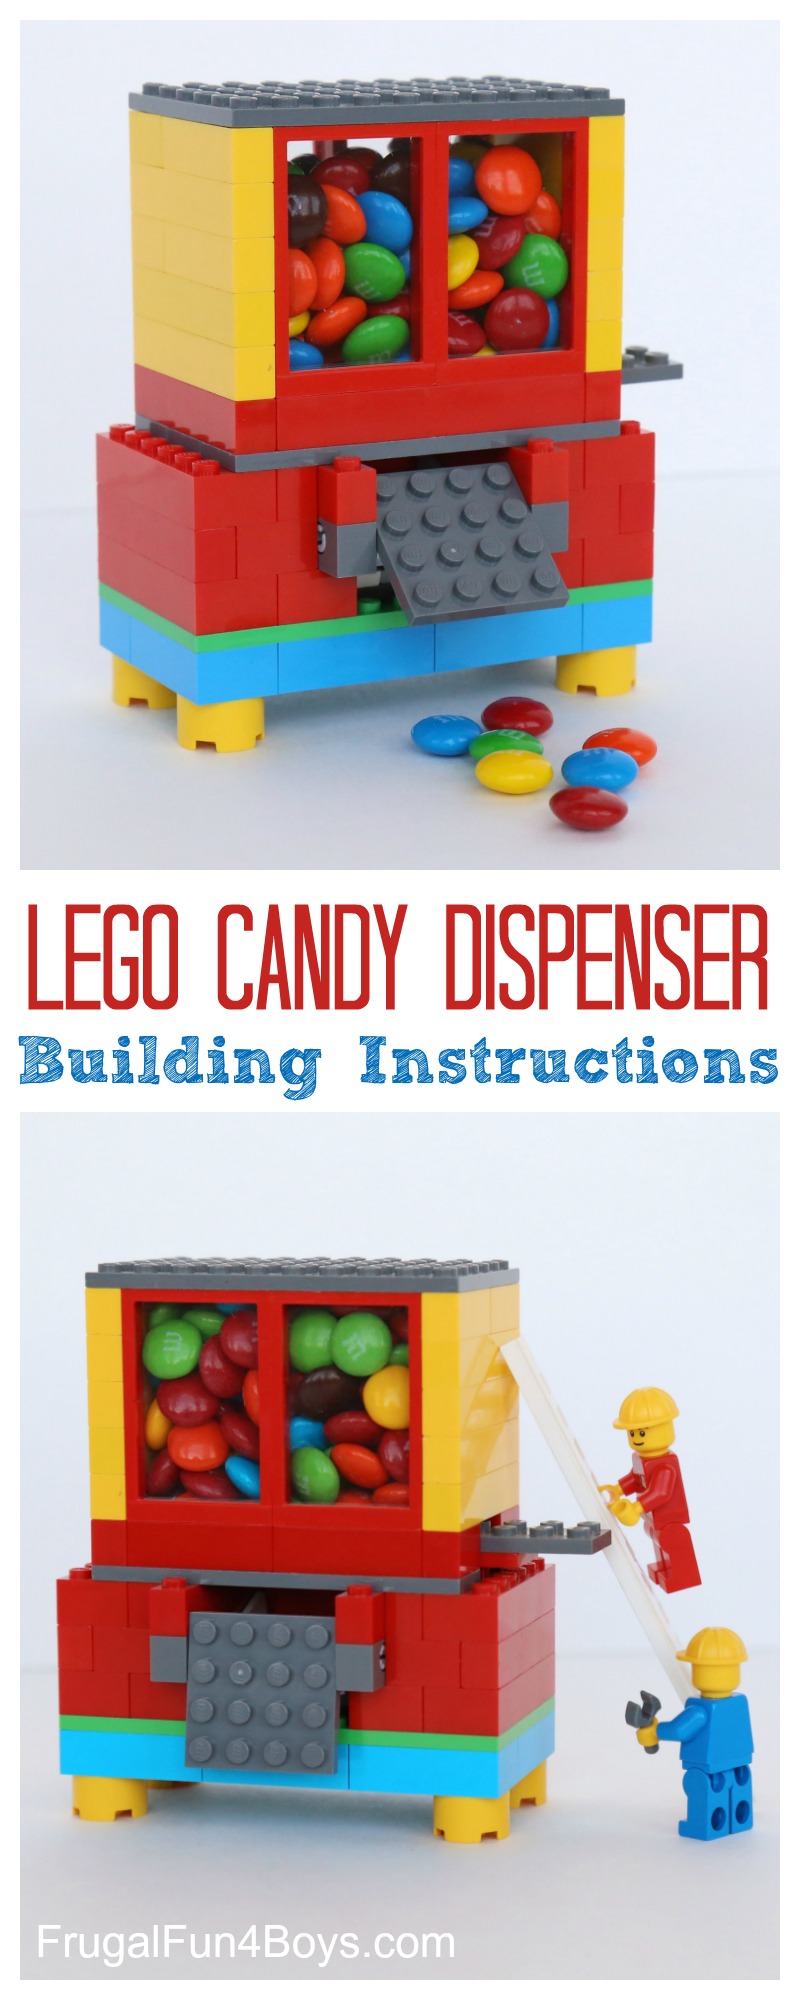 Lego candy dispenser